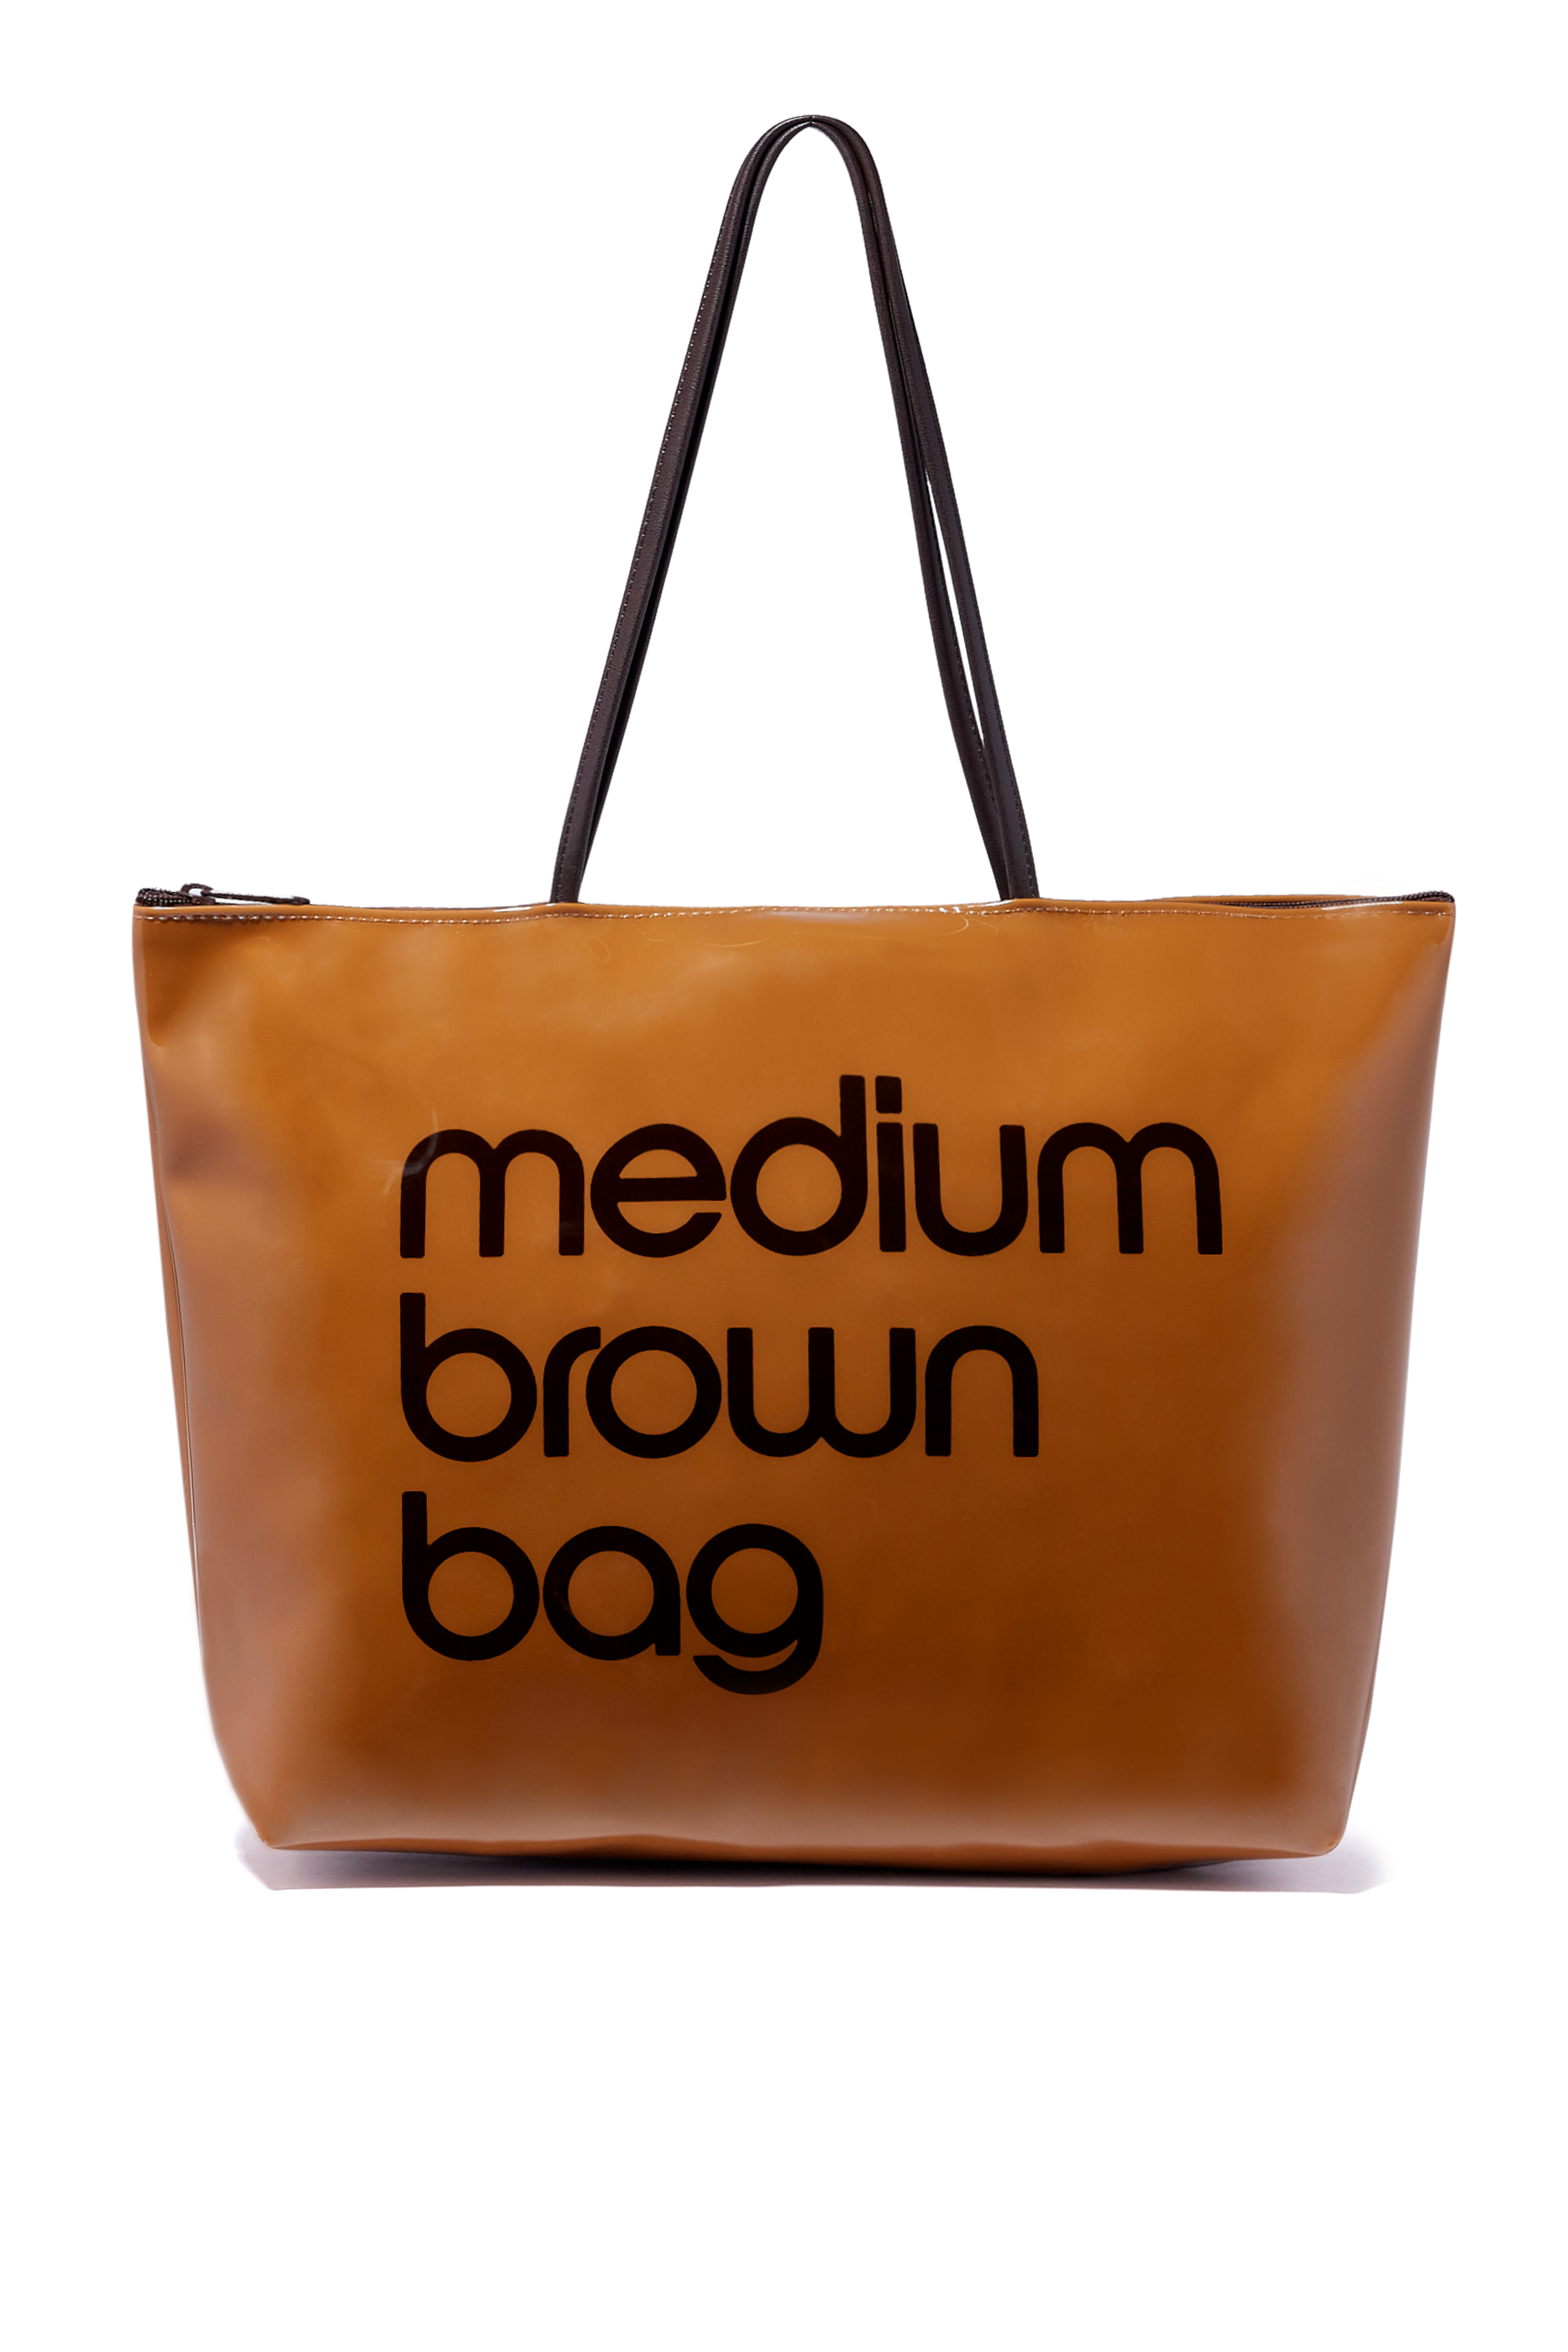 Talbots brown handbag purse - Gem